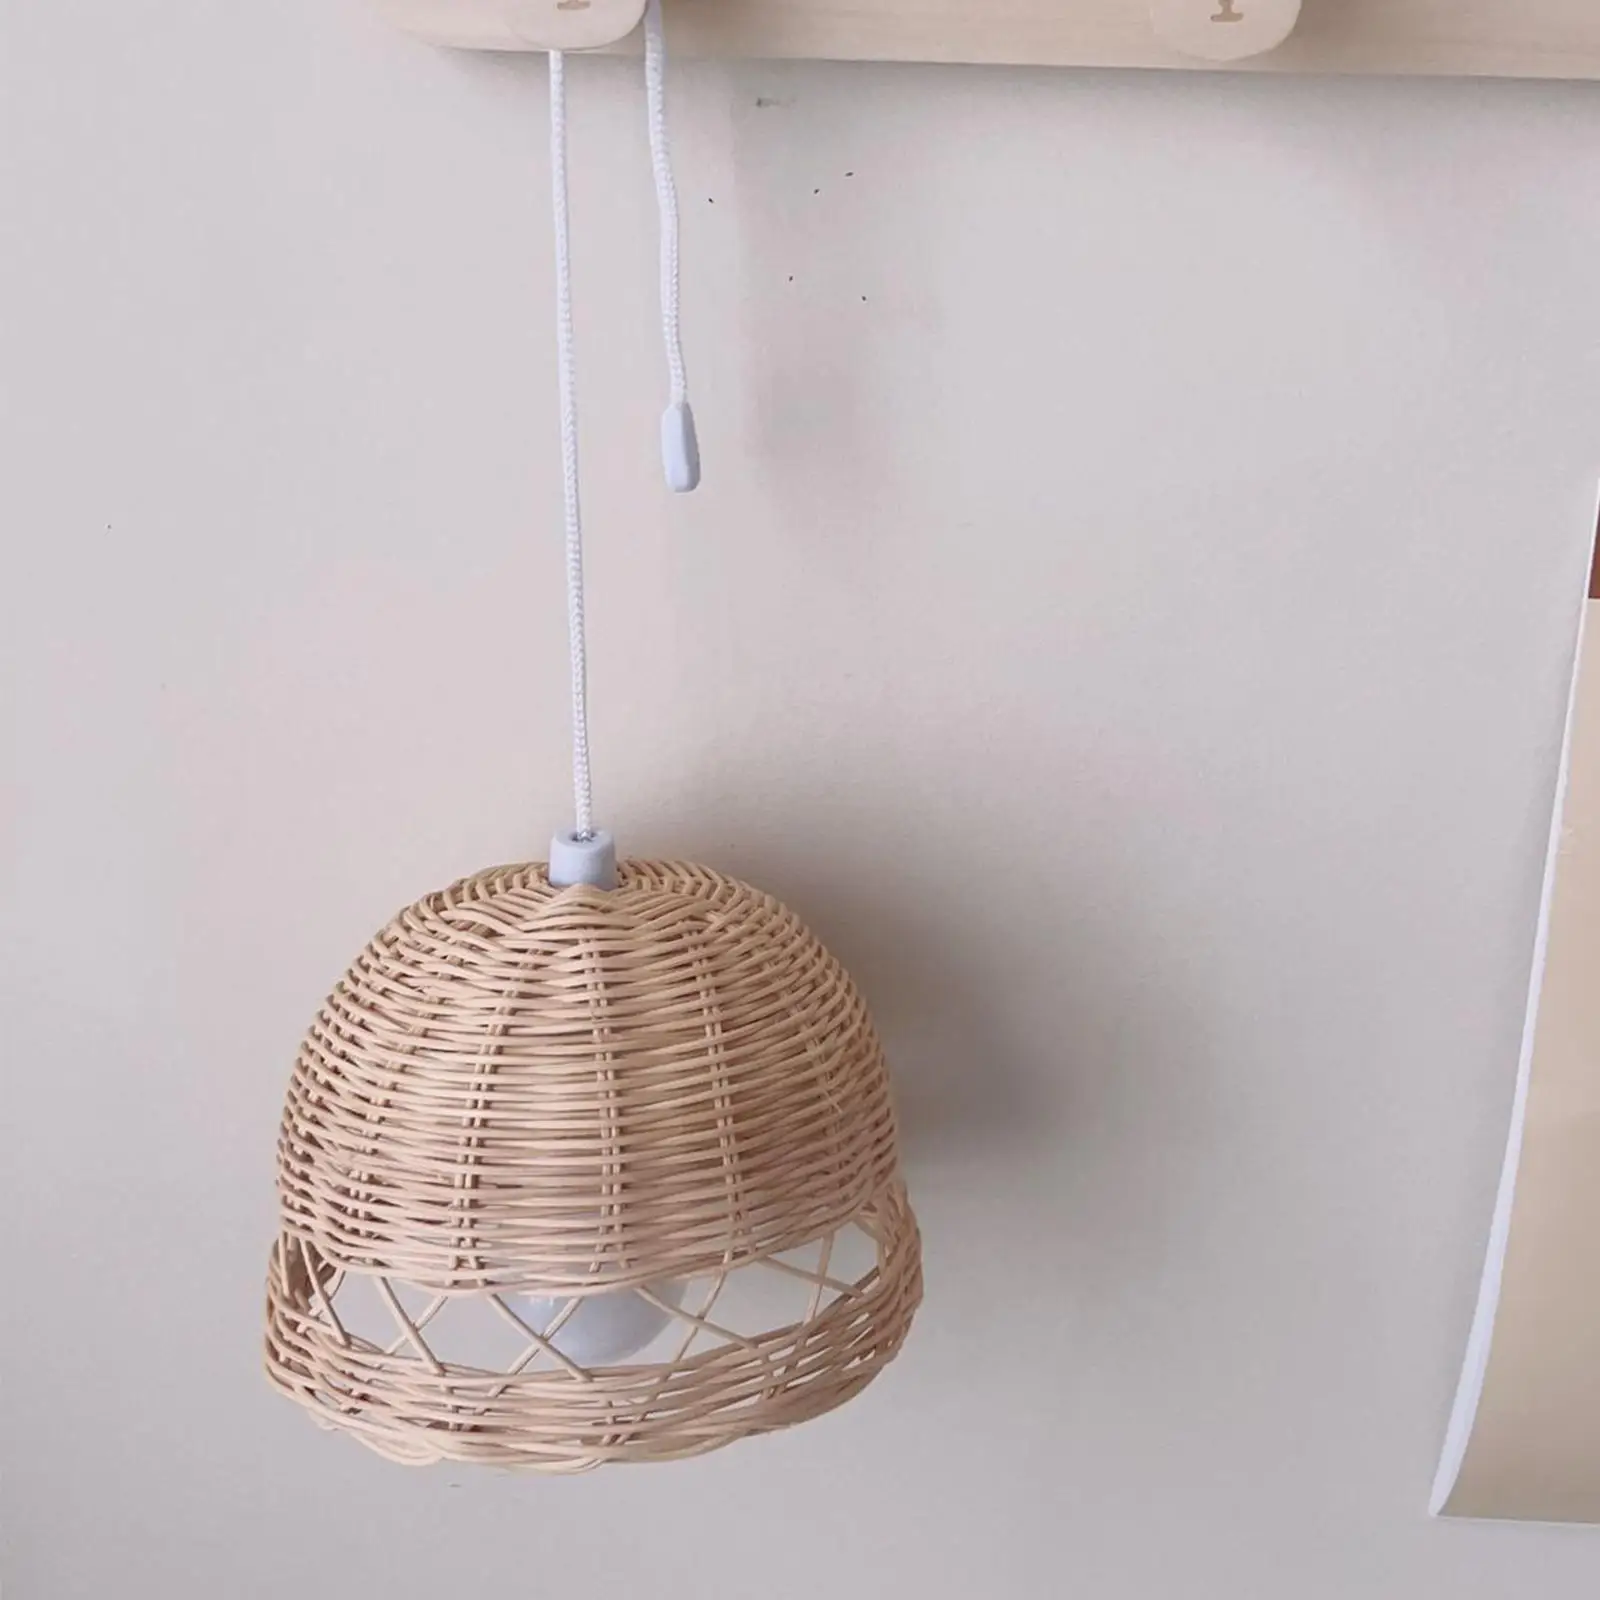 Rattan Lamp Shade Lamp Decoration Mini Boho Handmade Basket Chandelier Lamp Shade for Kids Room Living Room Cafe